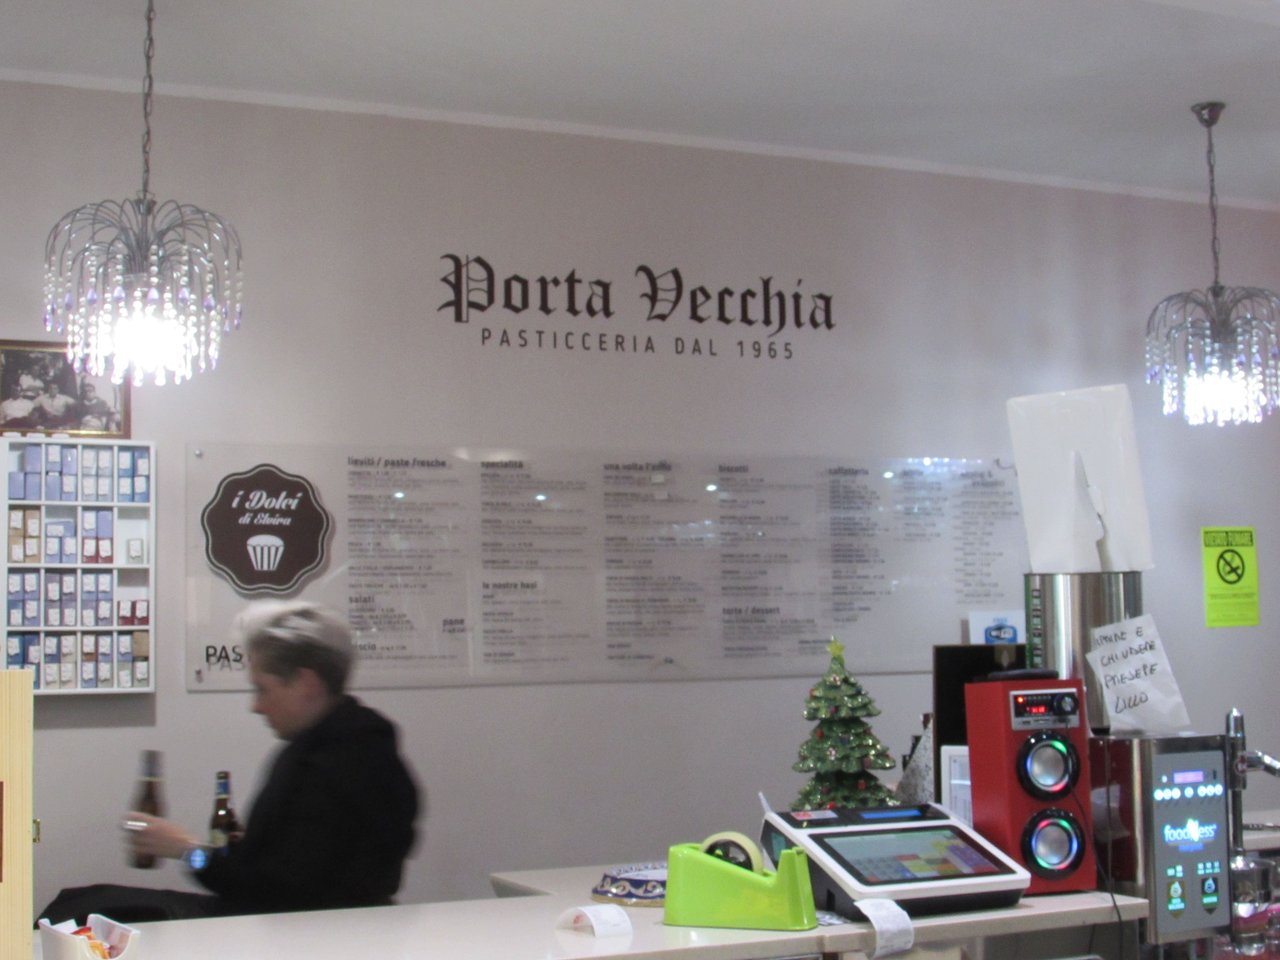 Birreria Pizzeria Porta Vecchia, Nocera Umbra